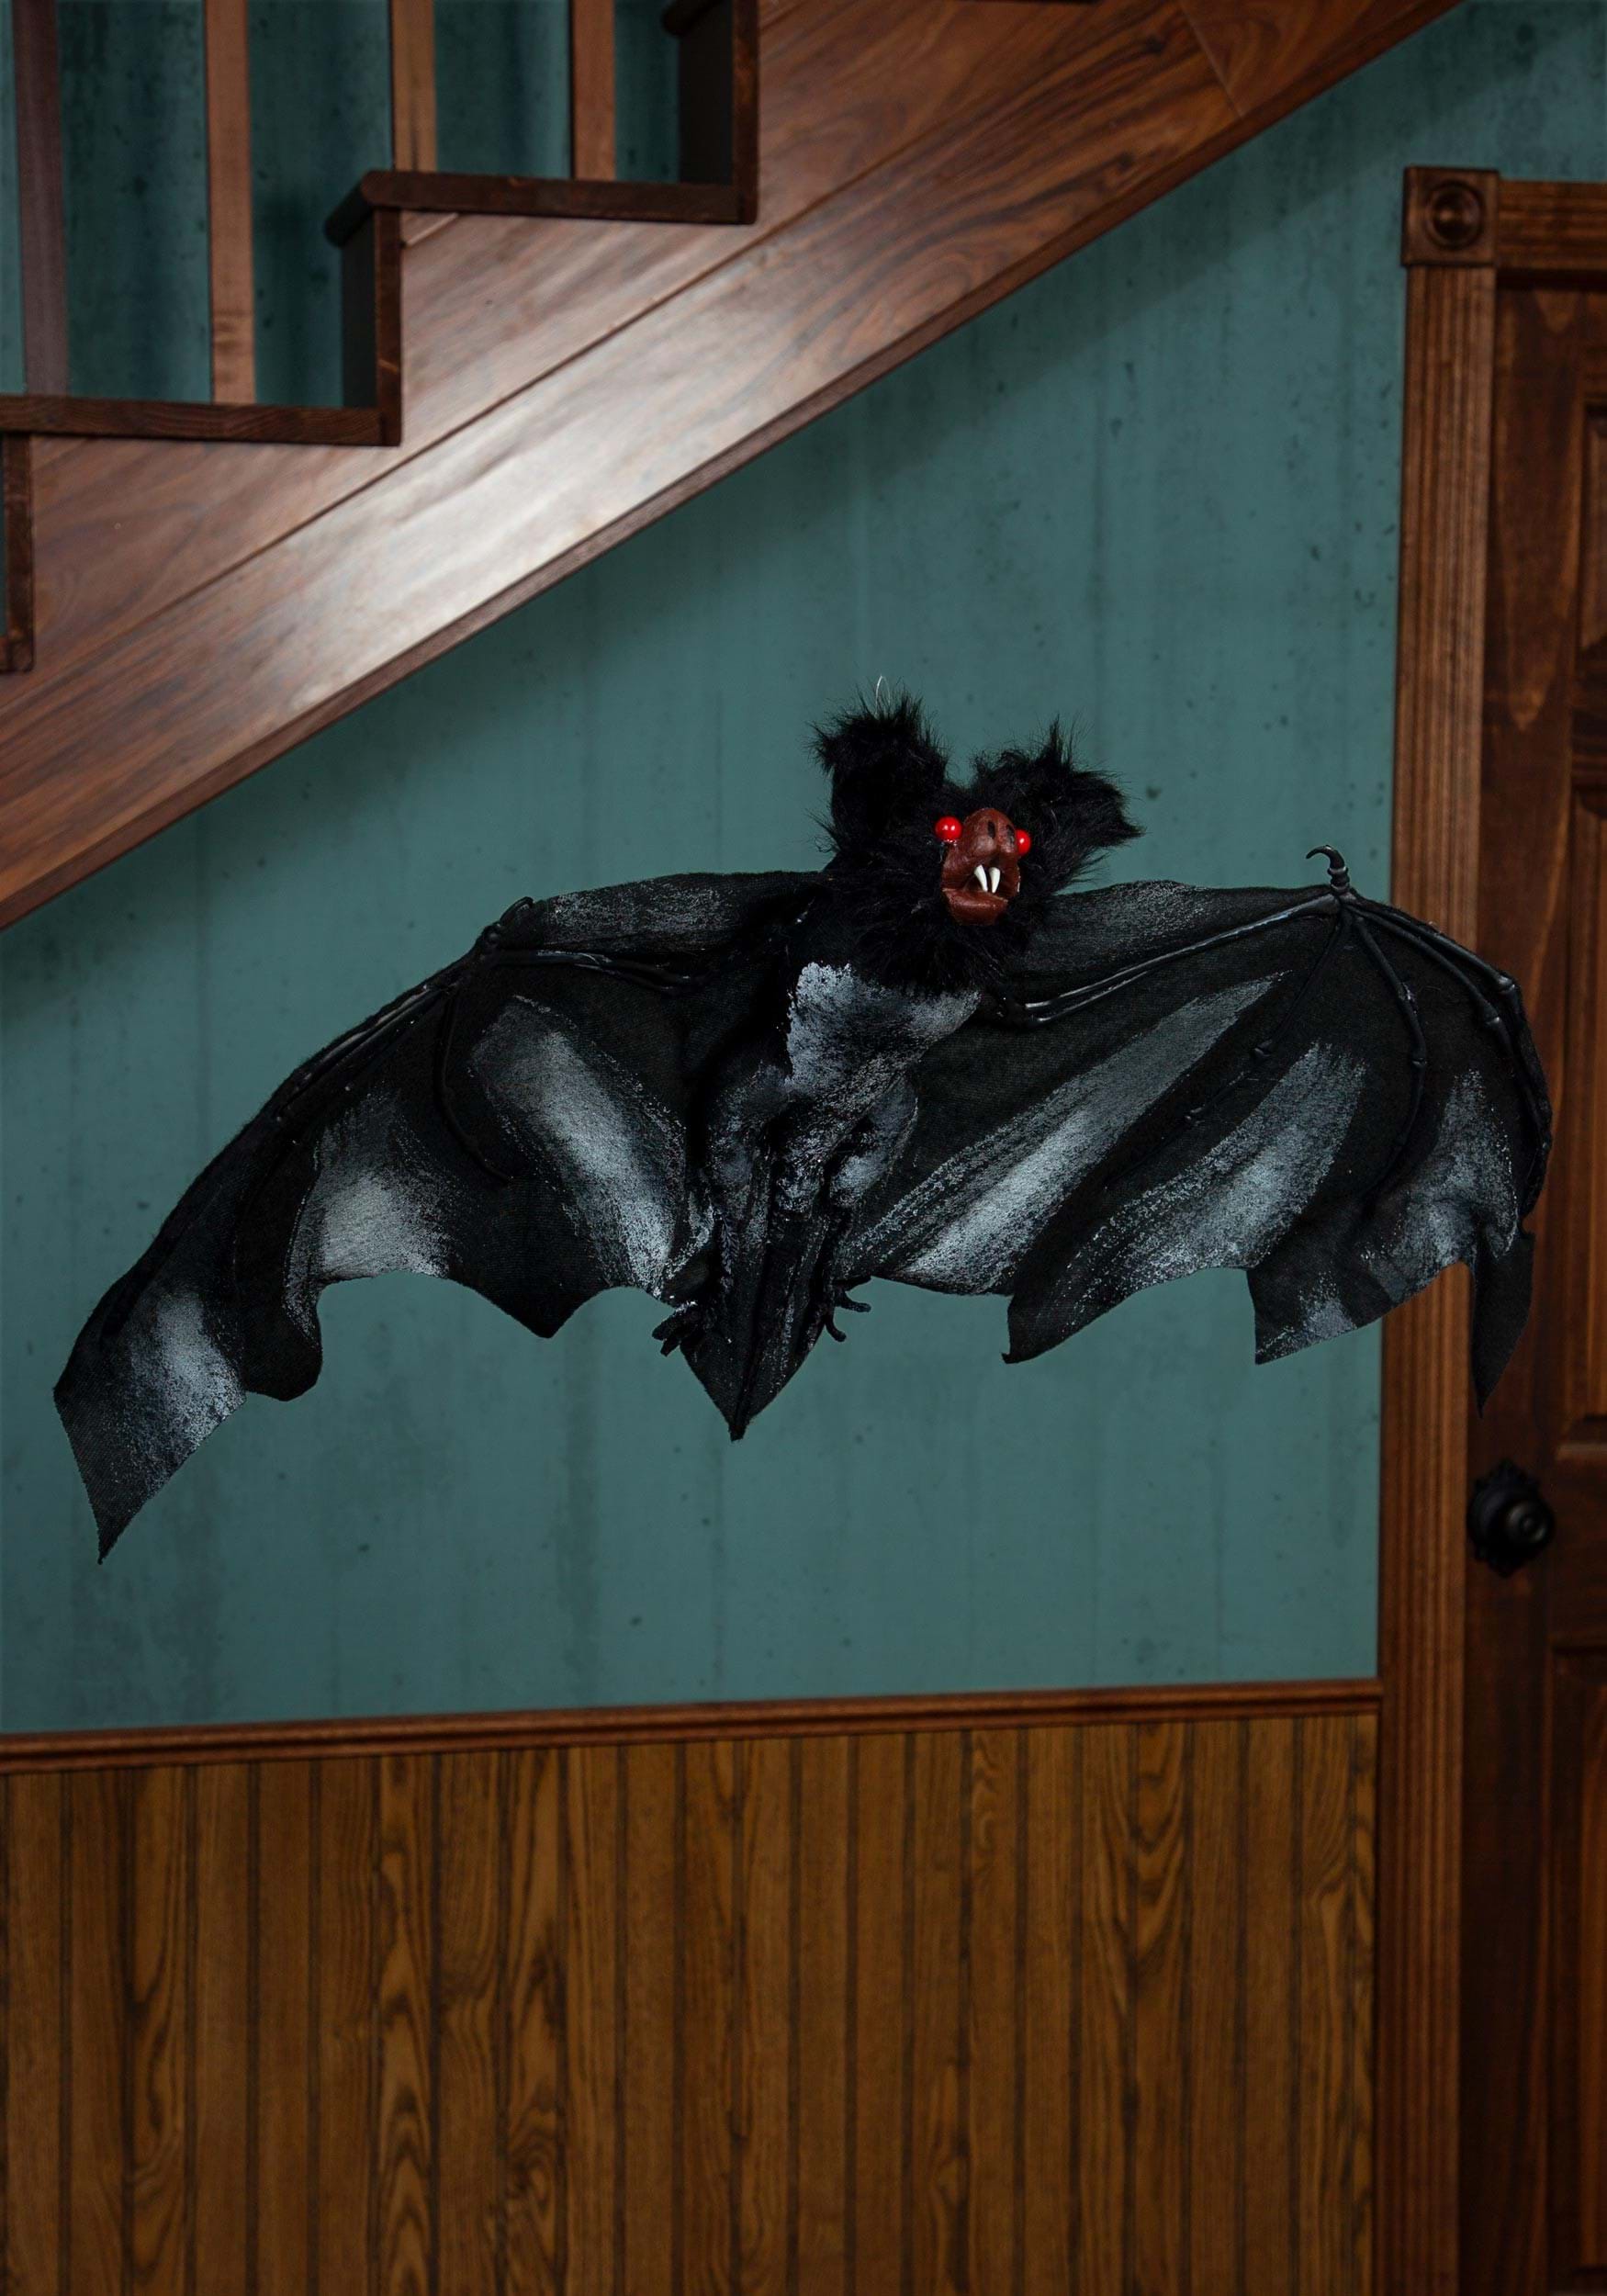 Black Bat Prop Decoration